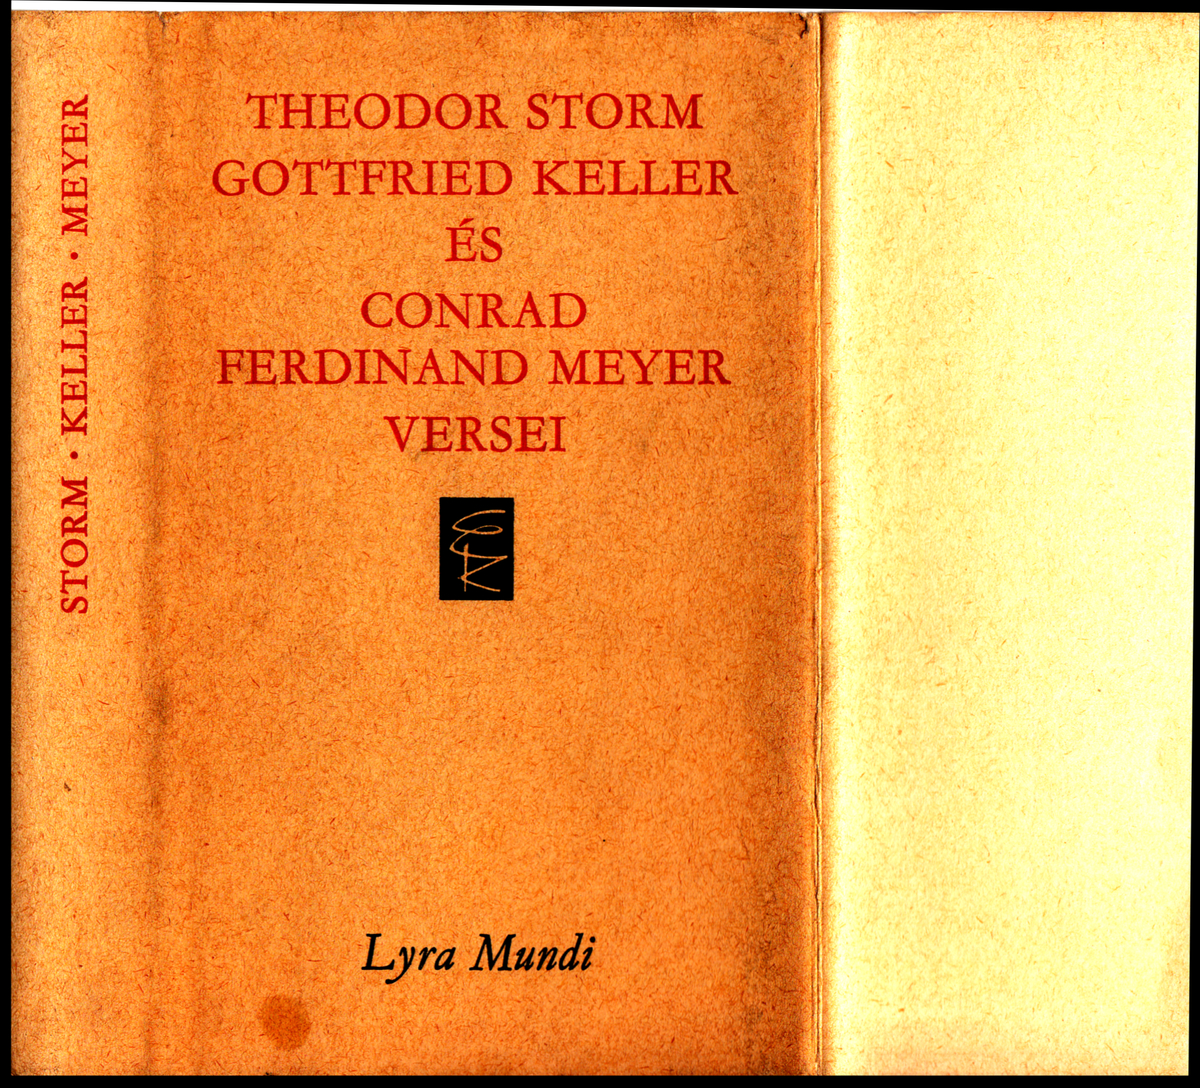 Storm, Theodor: Theodor Storm, Gottfried Keller és Conrad Ferdinand Meyer versei | PLM Collection